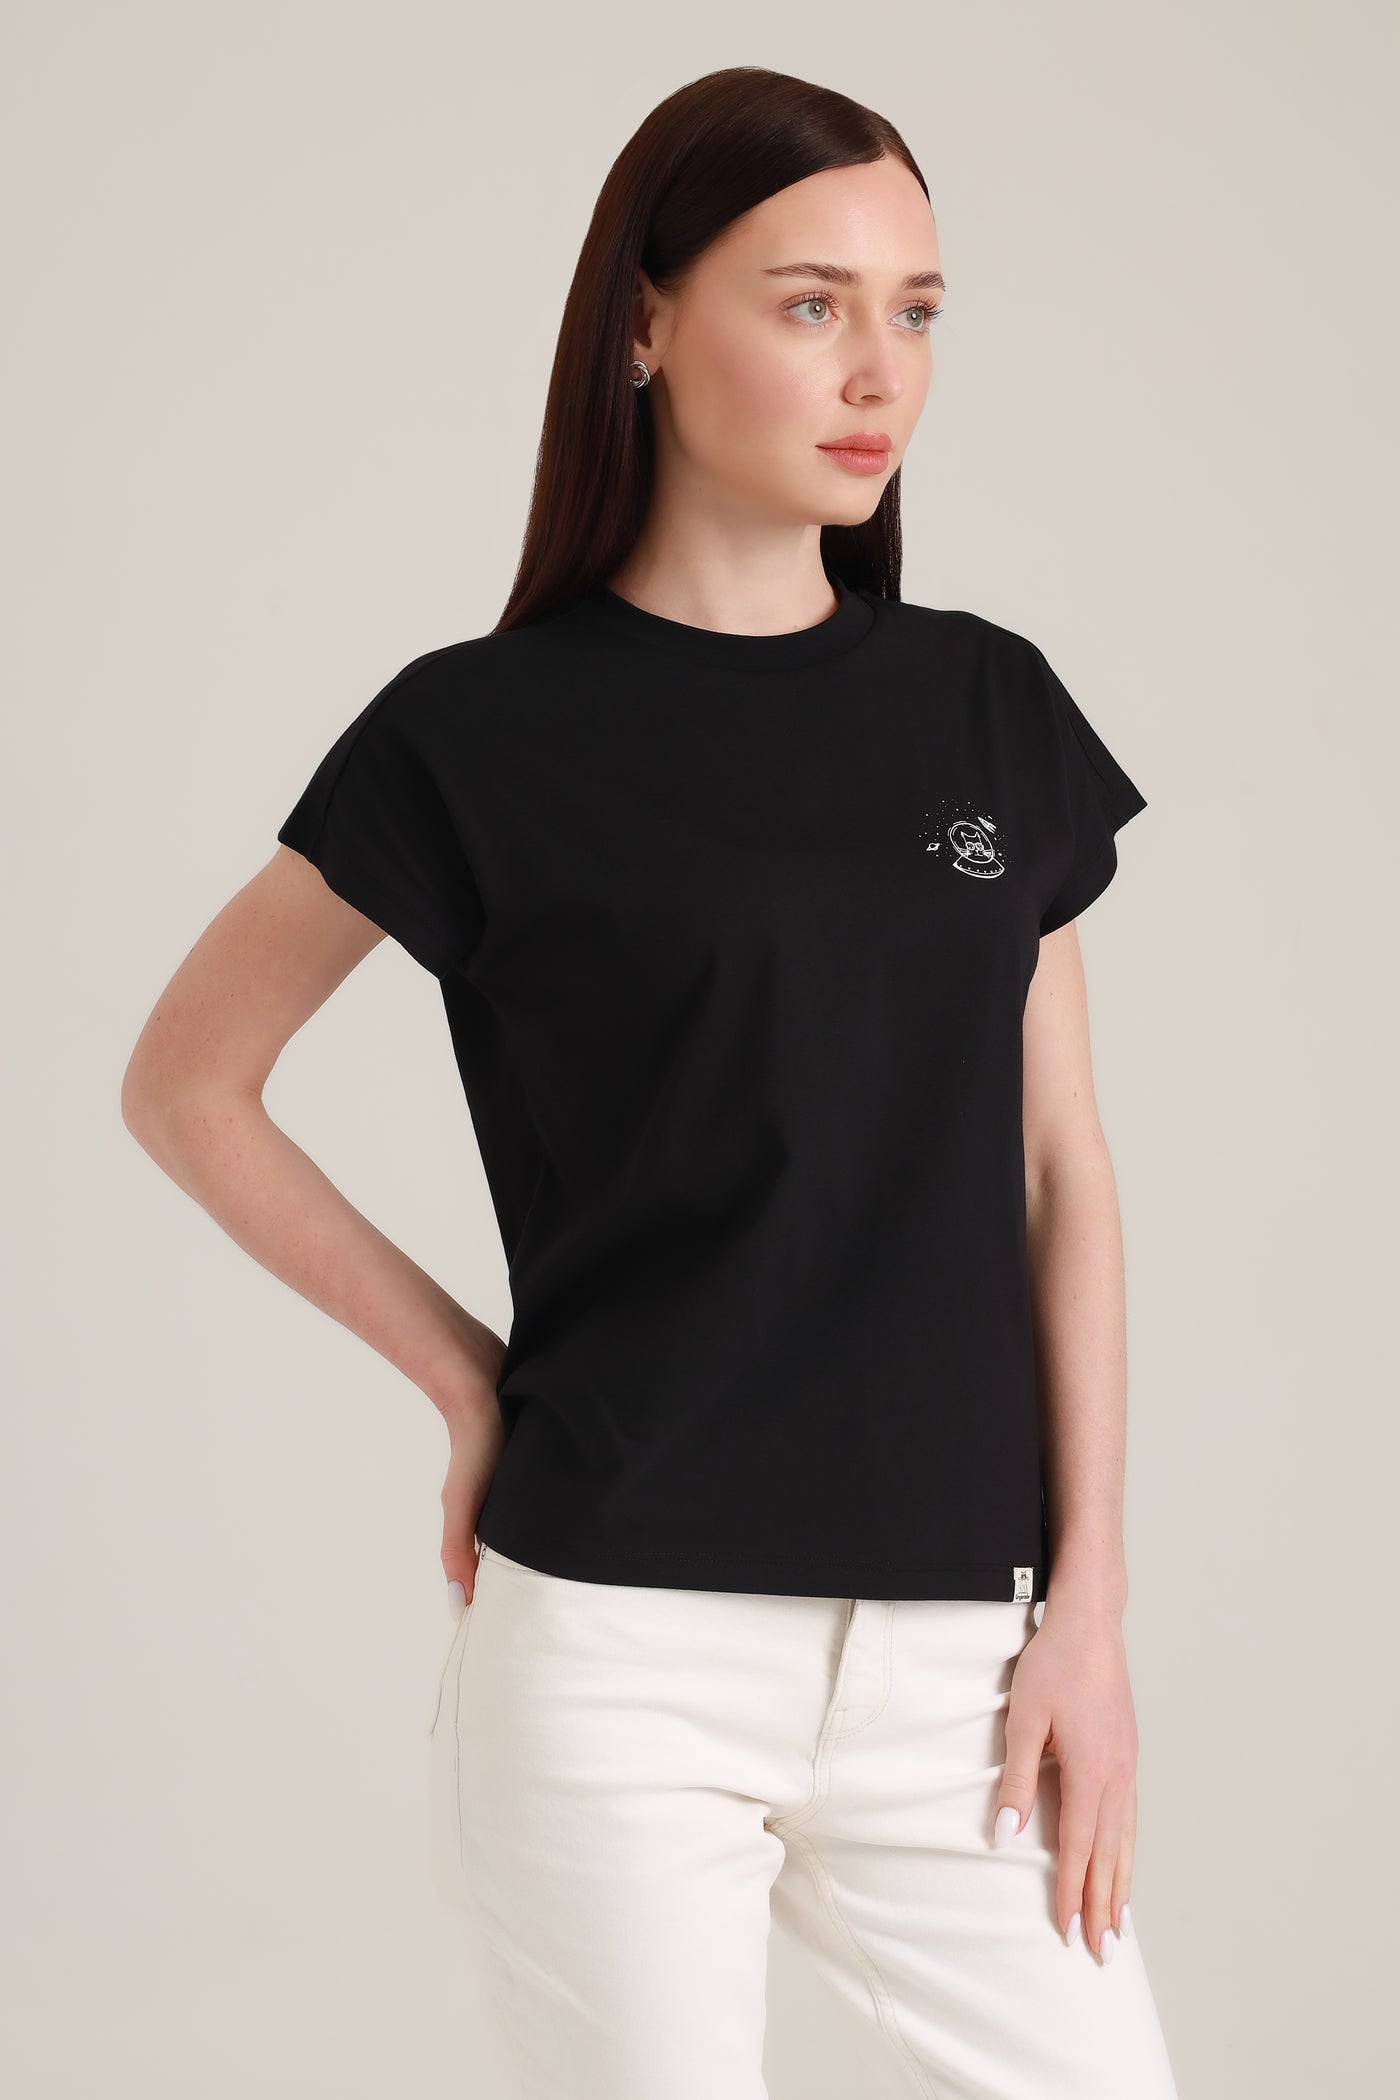 T-Shirt Women Short Sleeves Space Cat Black